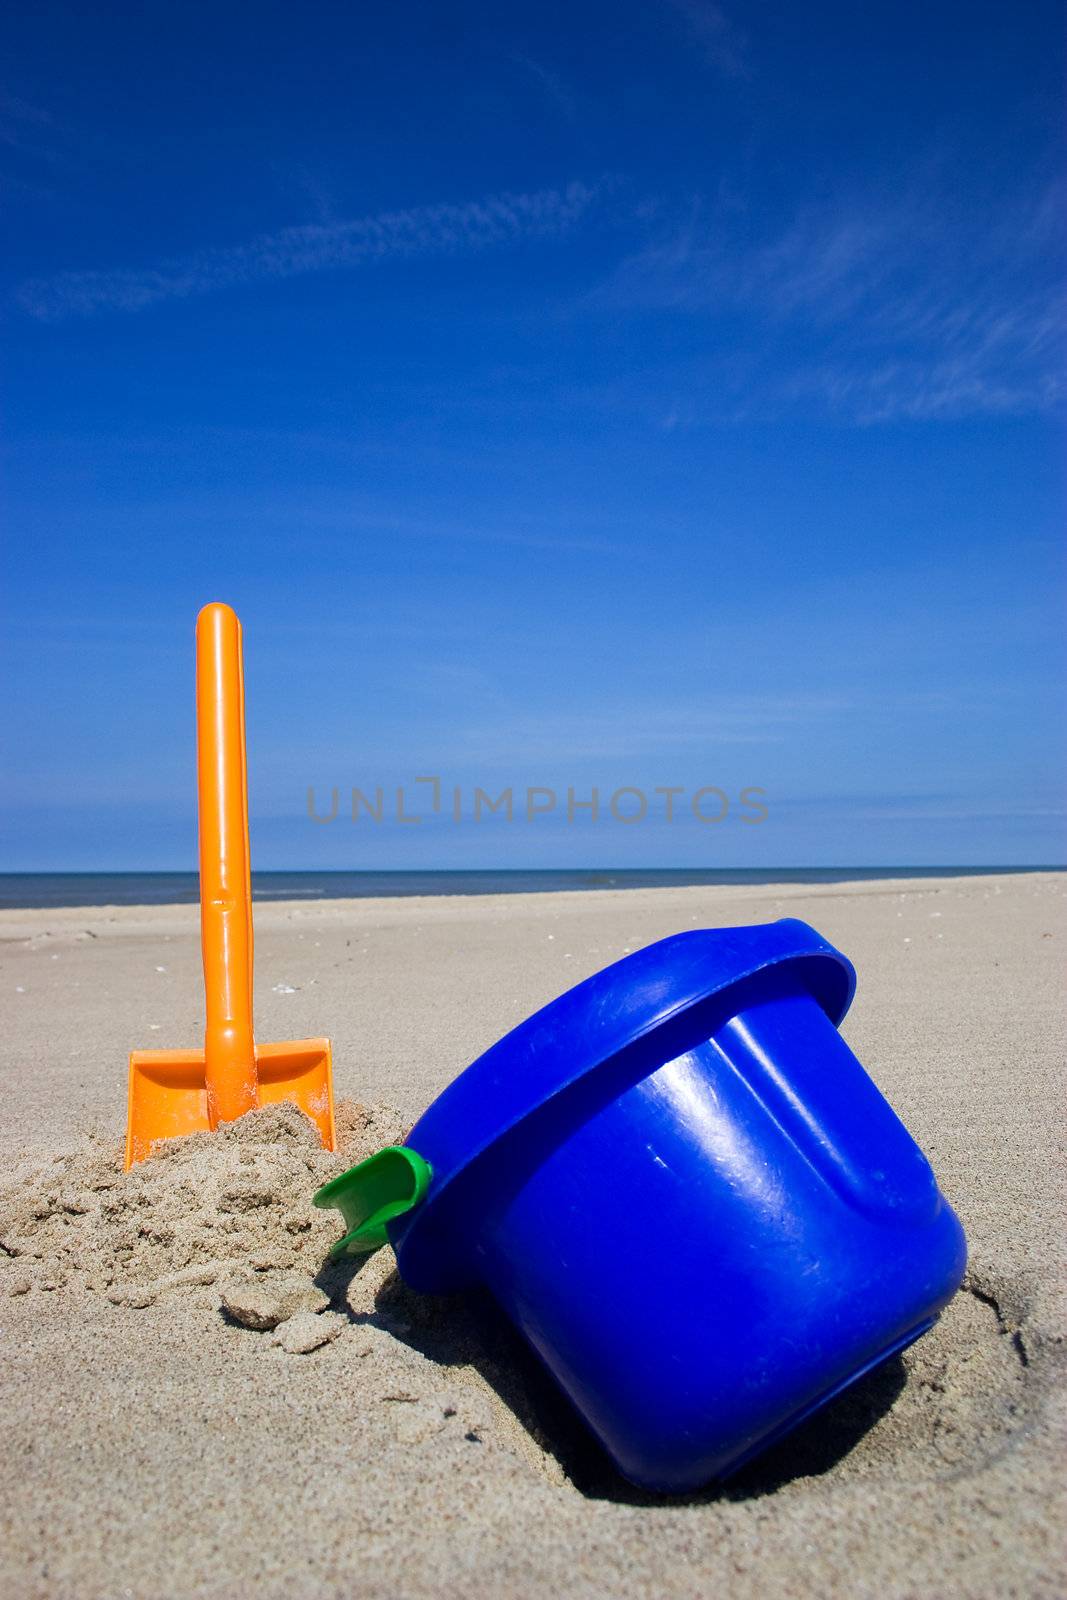 Orange plastic spade and blue bucket in the sandy seashore